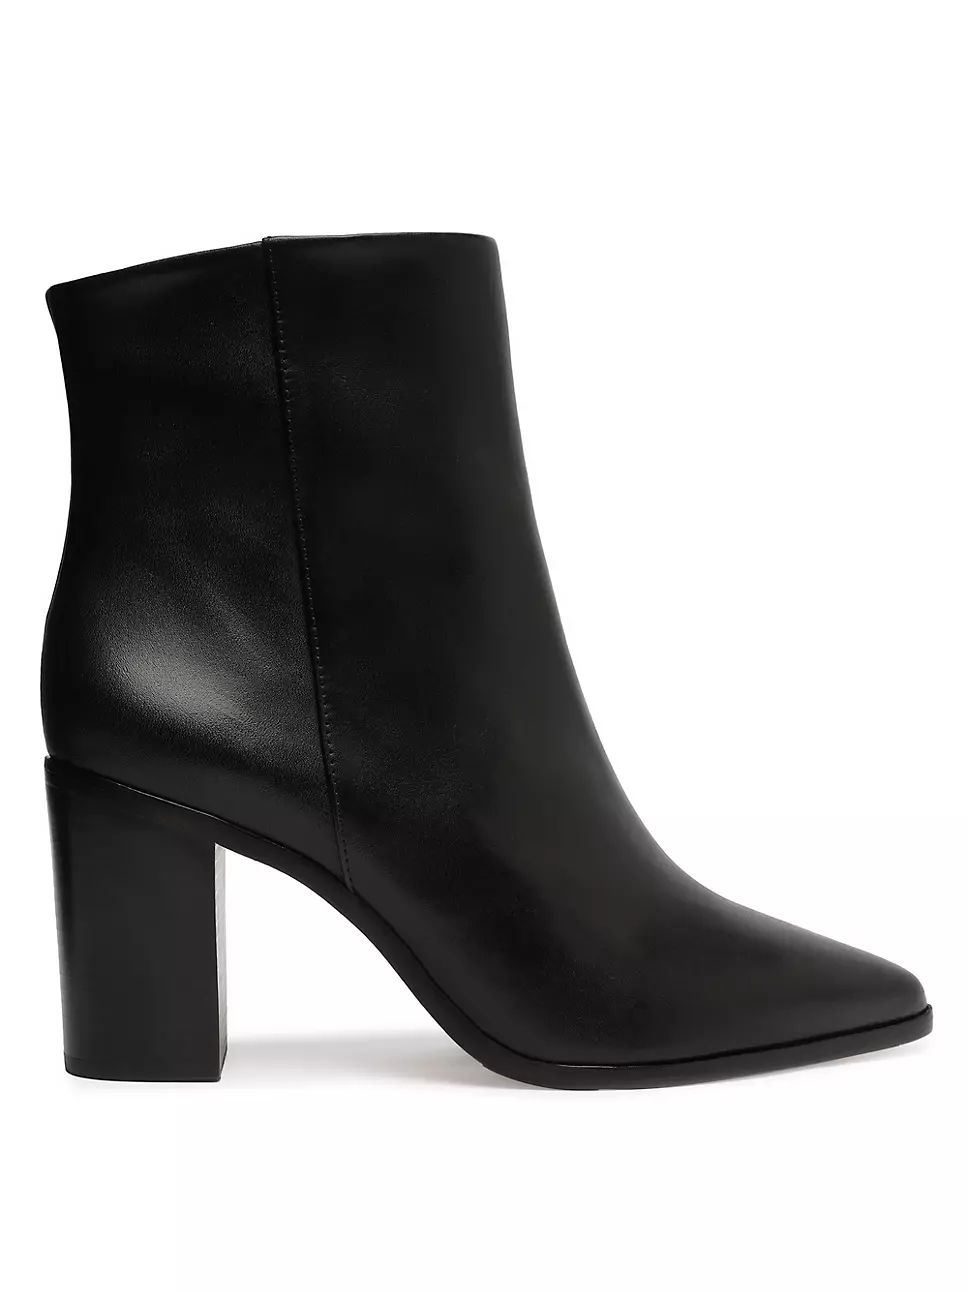 Schutz Mikki Leather Ankle Boots | Saks Fifth Avenue